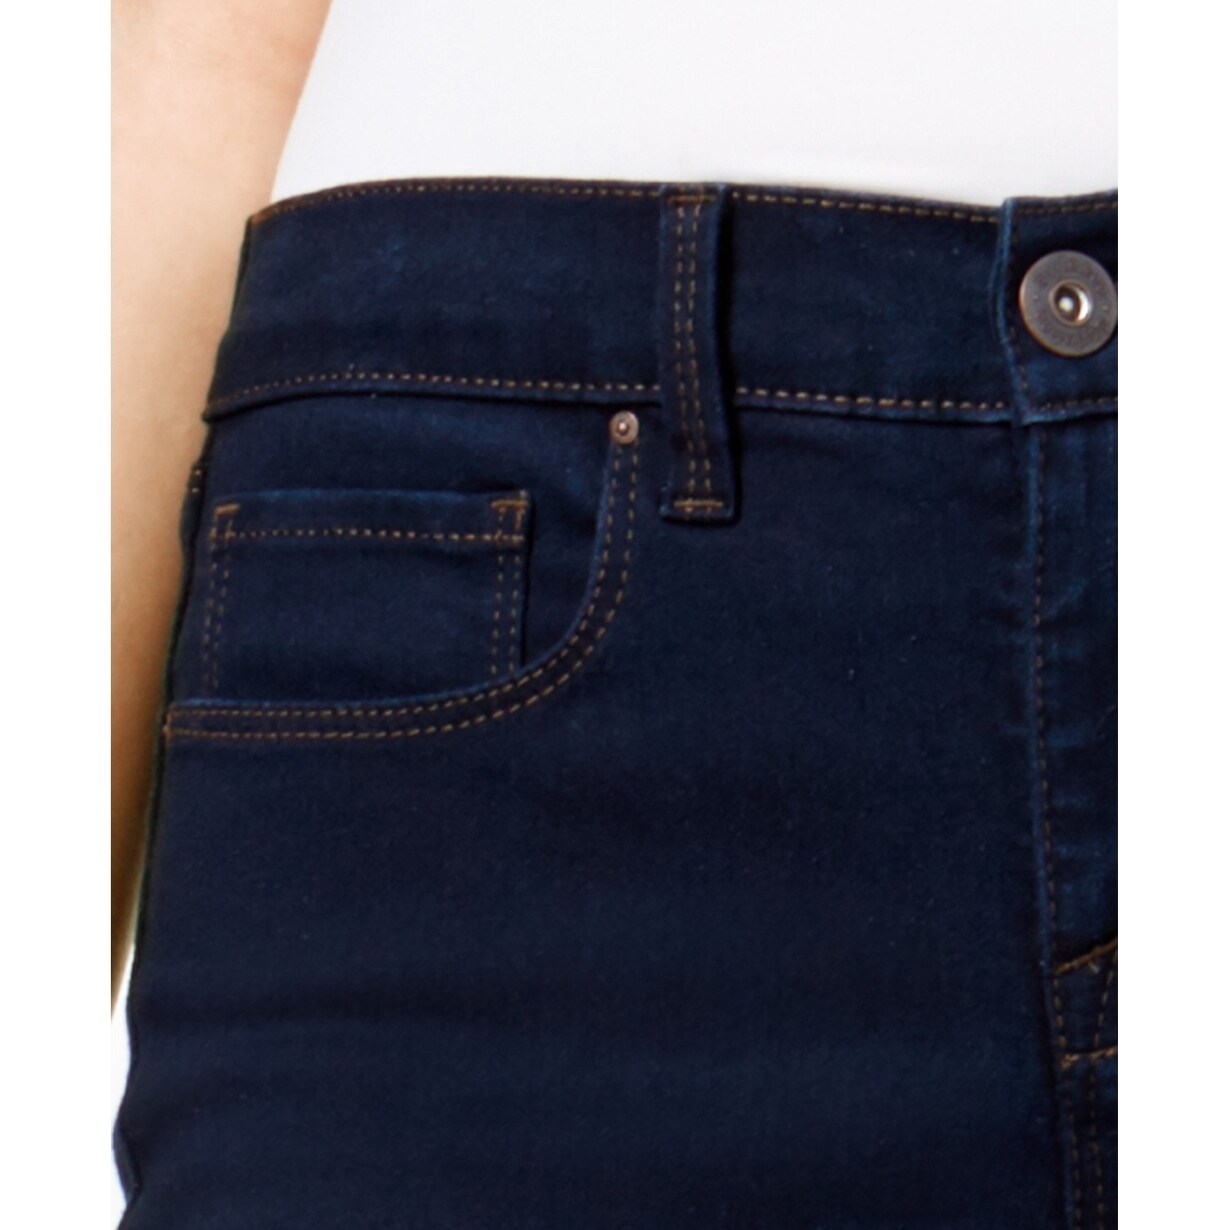 womens jeans size 14 short